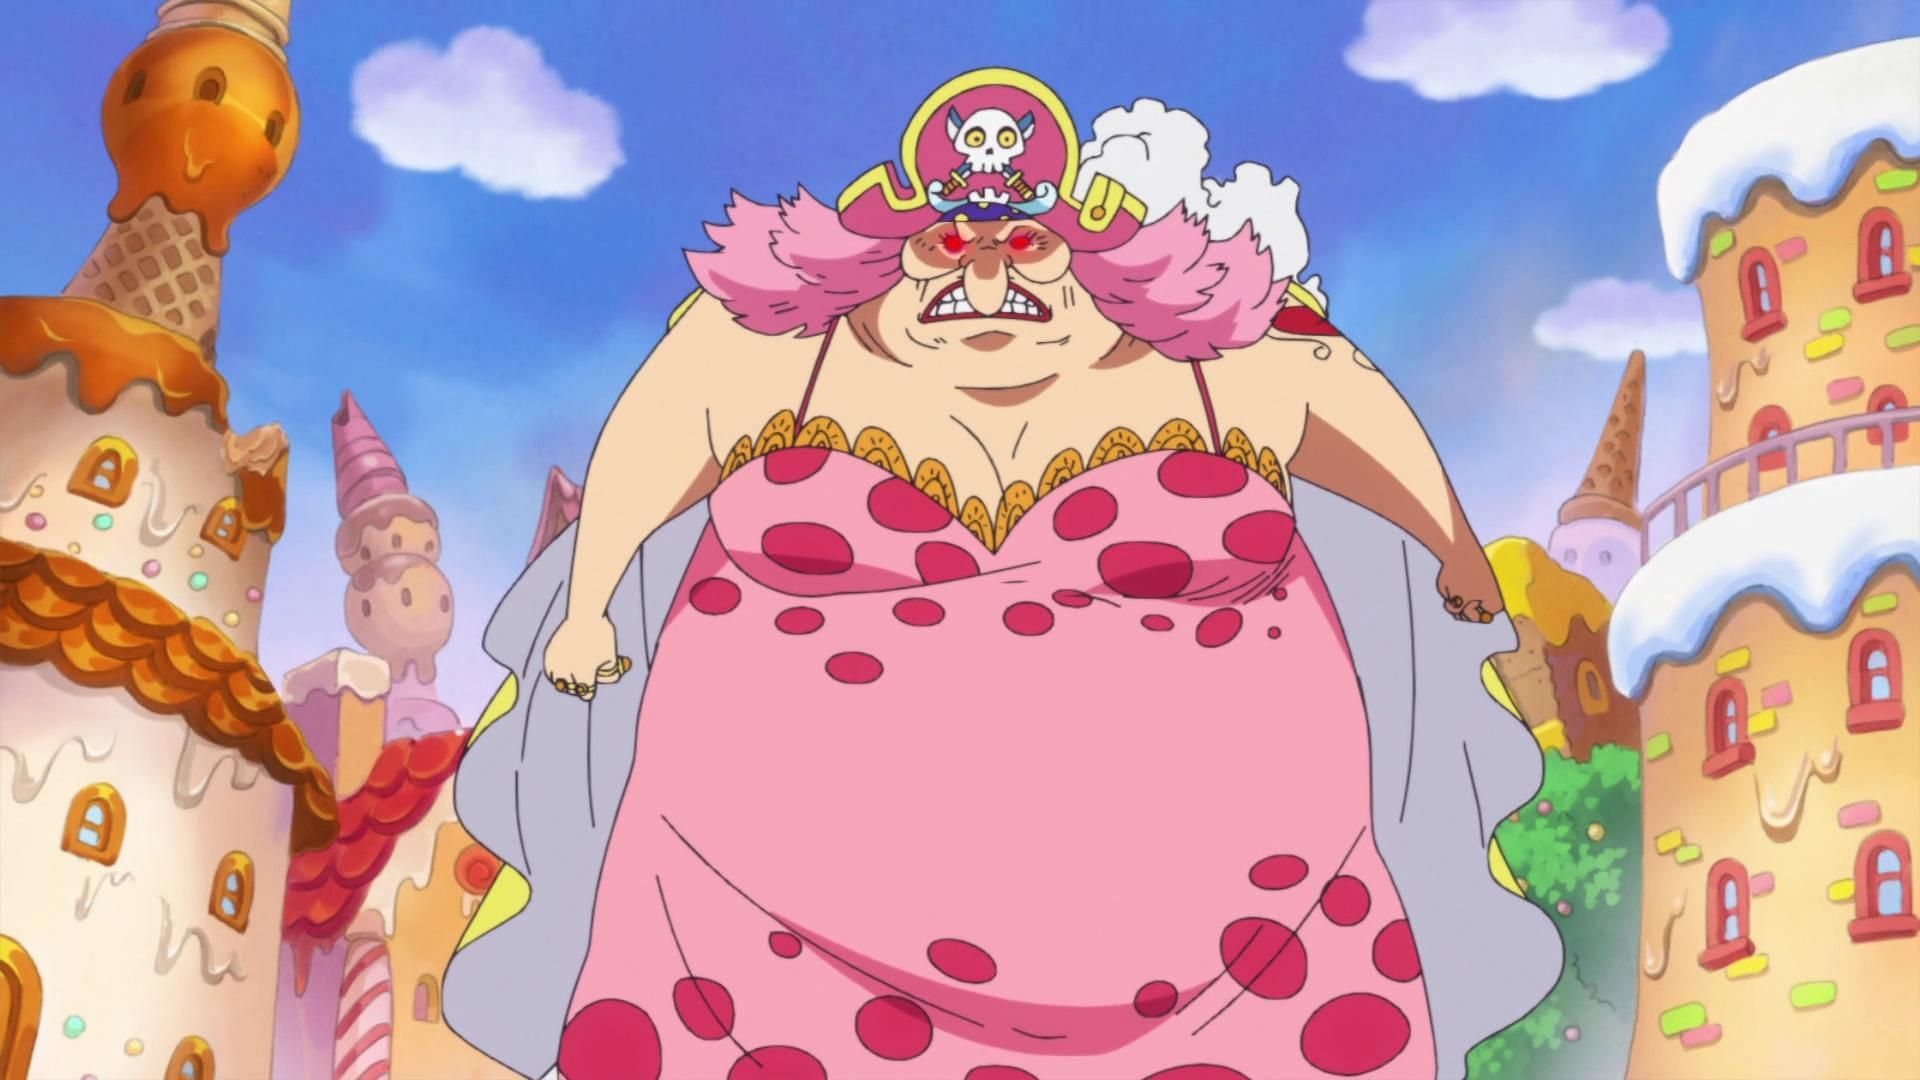 Big Mom as seen in the One Piece anime (Image Credits: Eiichiro Oda/Shueisha, Viz Media, One Piece)